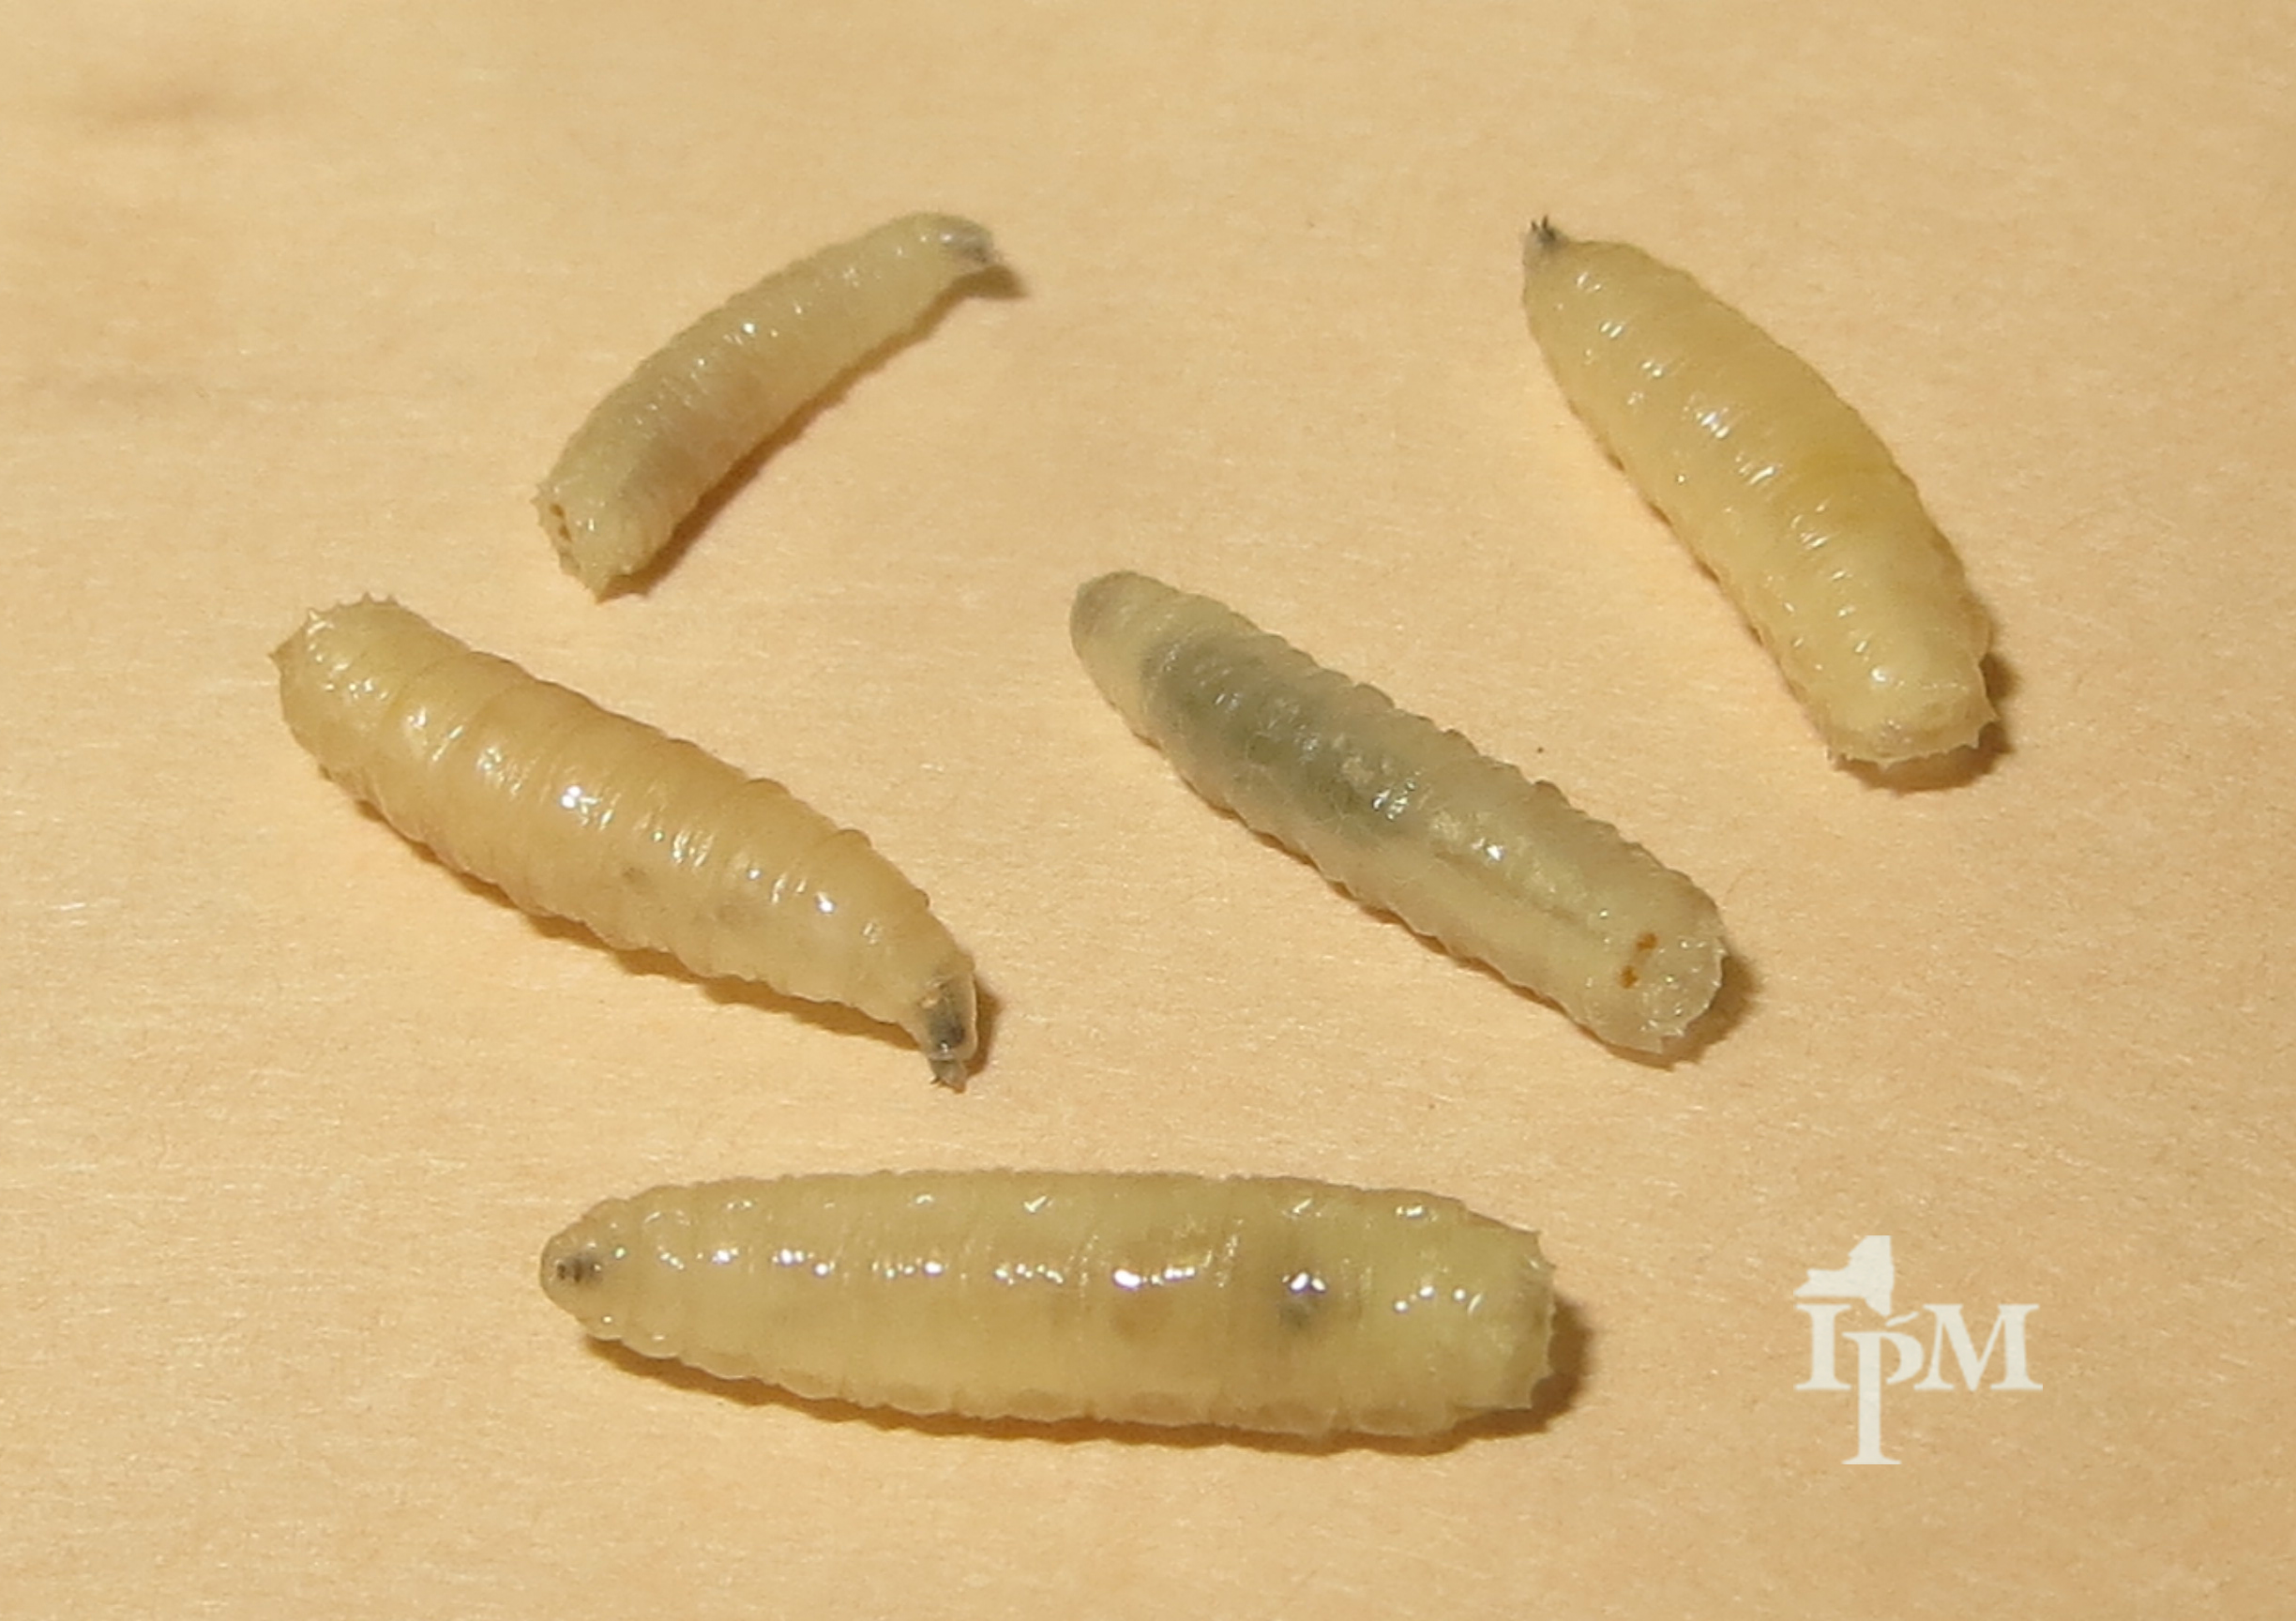 Ephemerella личинки